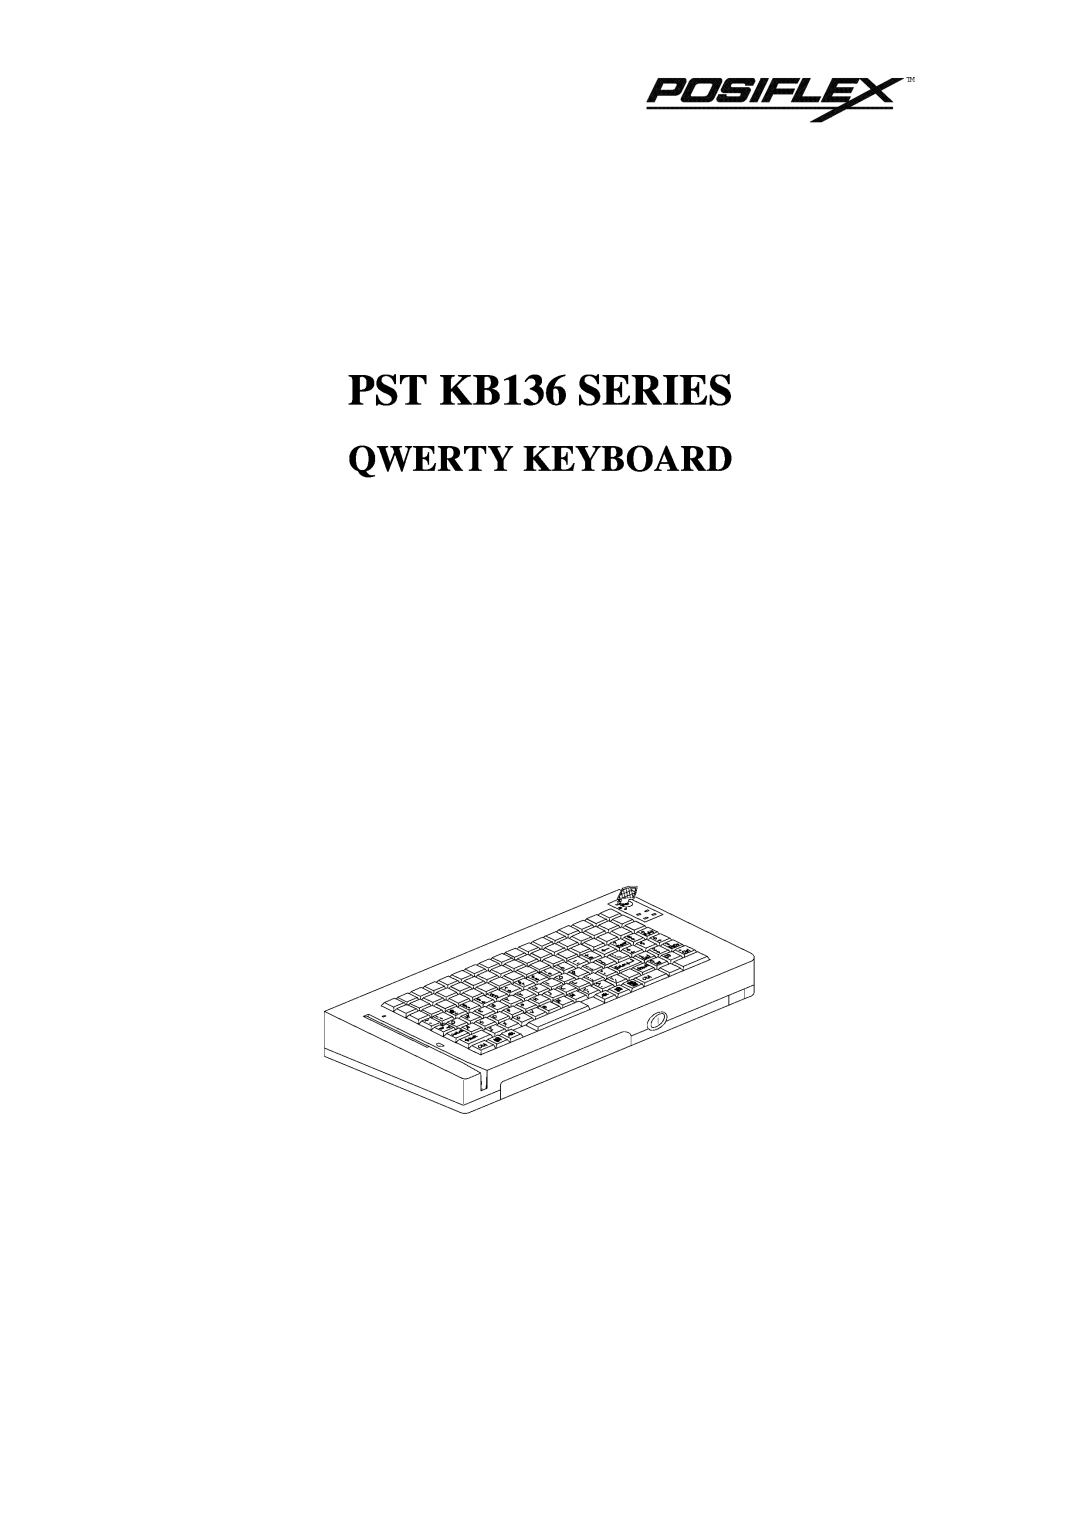 POSIFLEX Business Machines manual PST KB136 SERIES, Qwerty Keyboard 